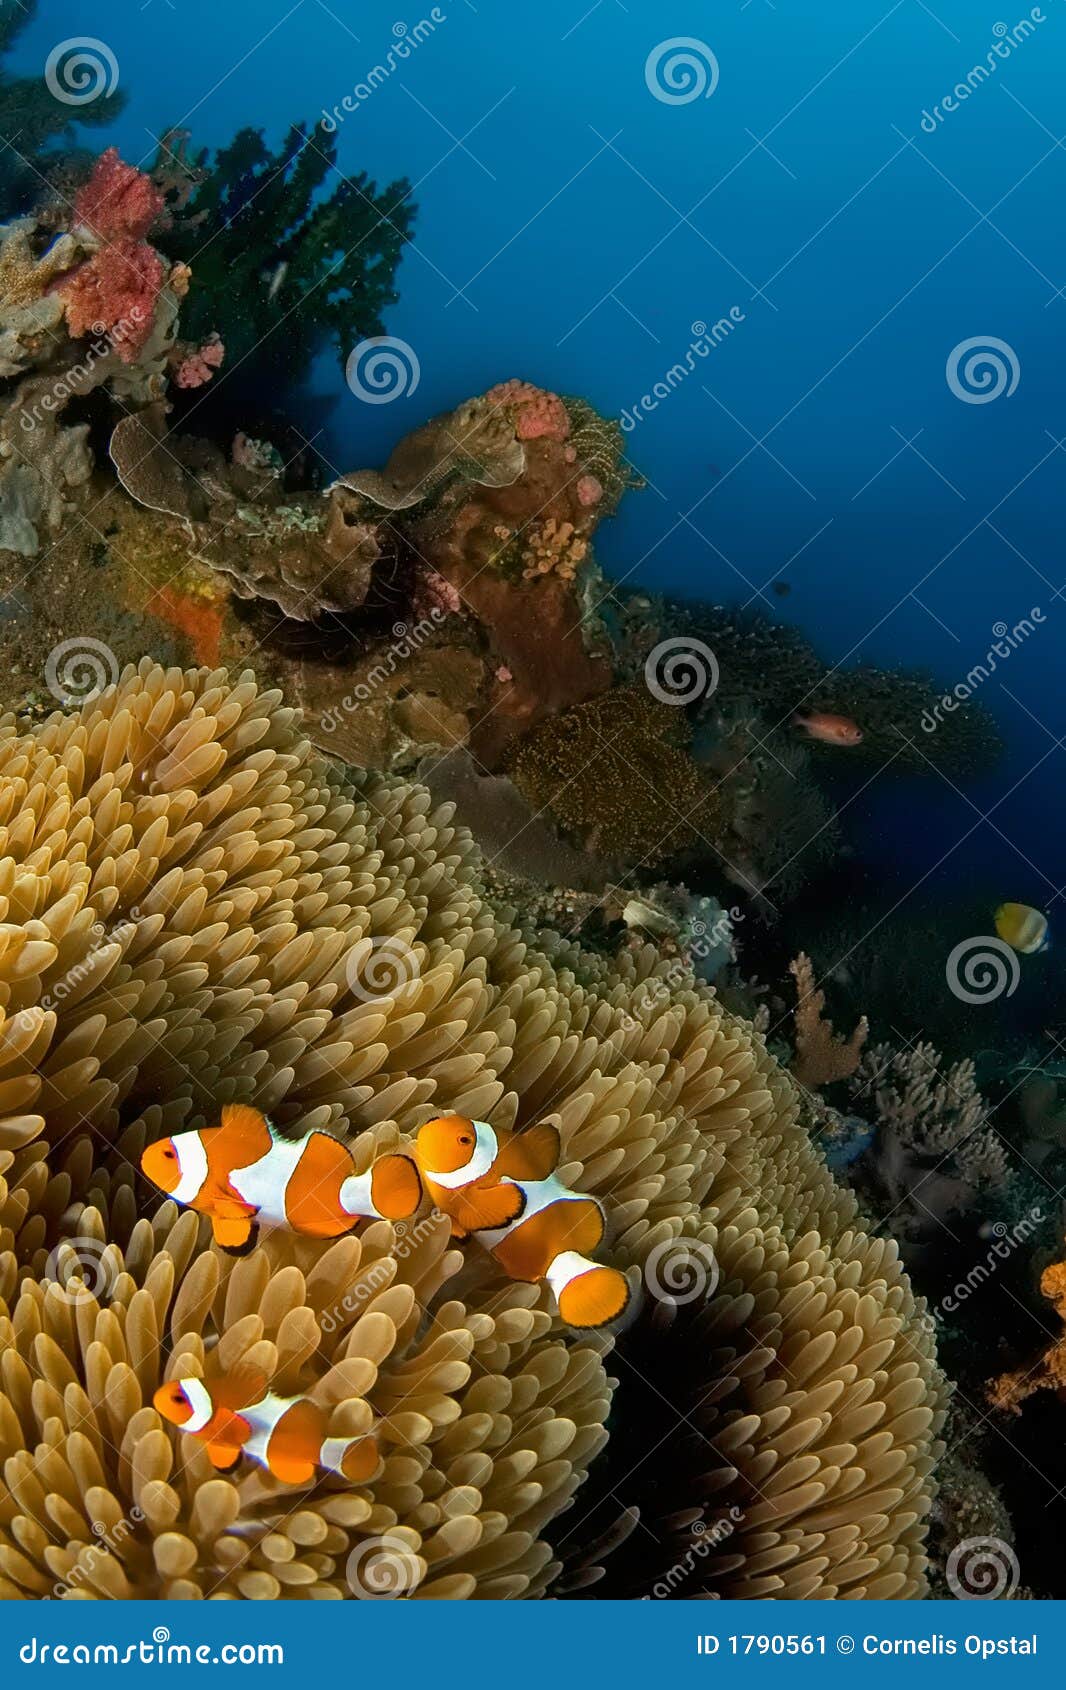 anemone fishes indonesia sulawesi